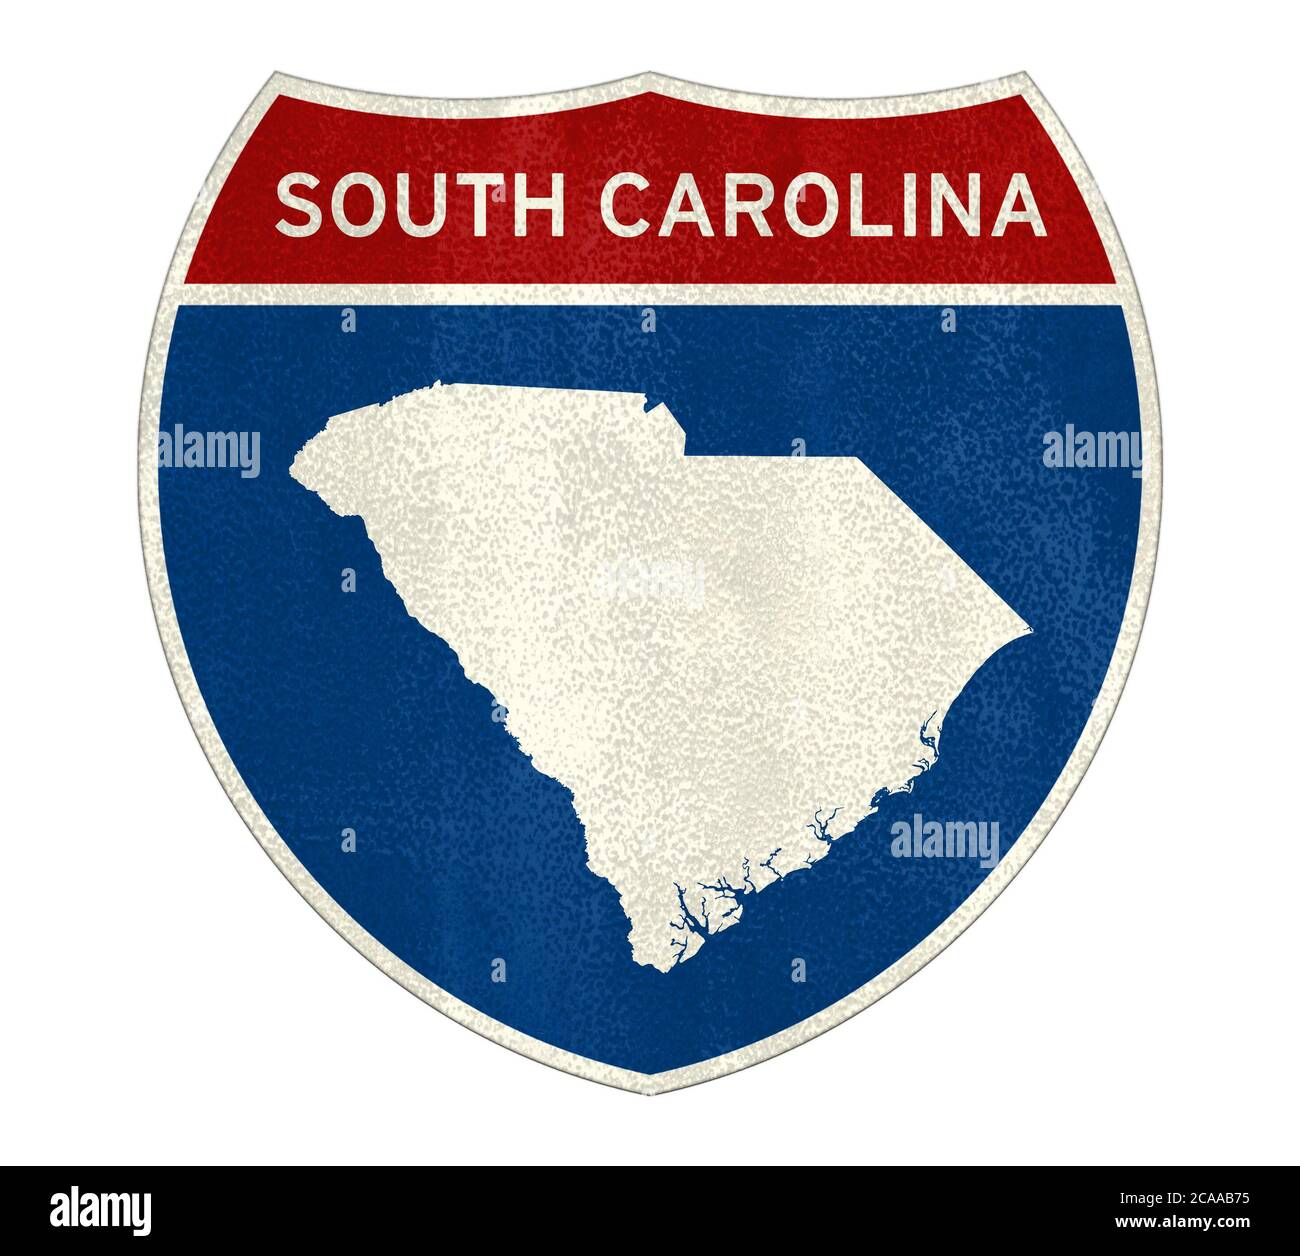 South Carolina Interstate road sign map Stock Photo